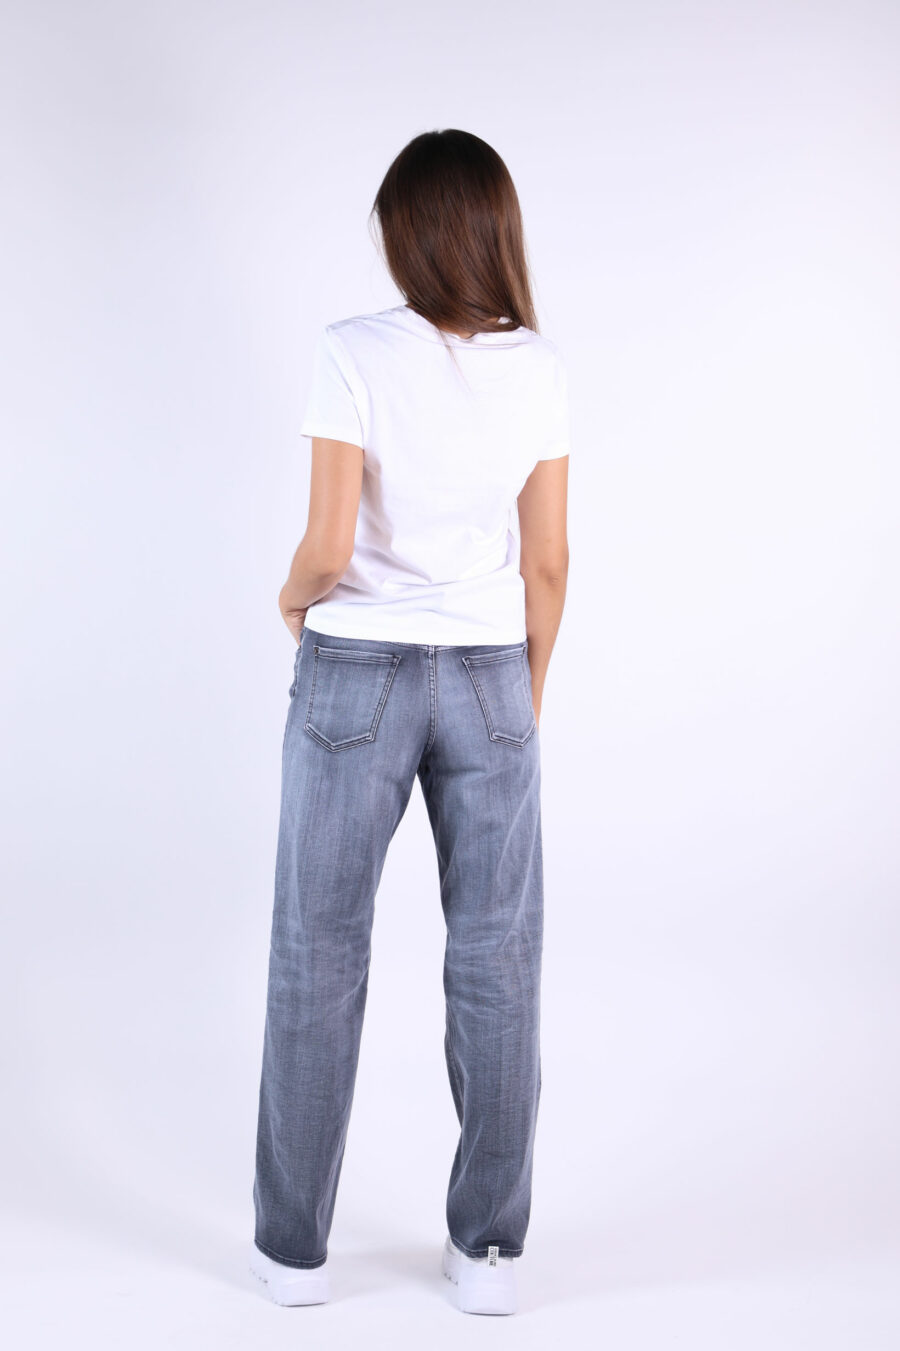 Jeans "San Diego jean" black worn - 361223054662201936 2